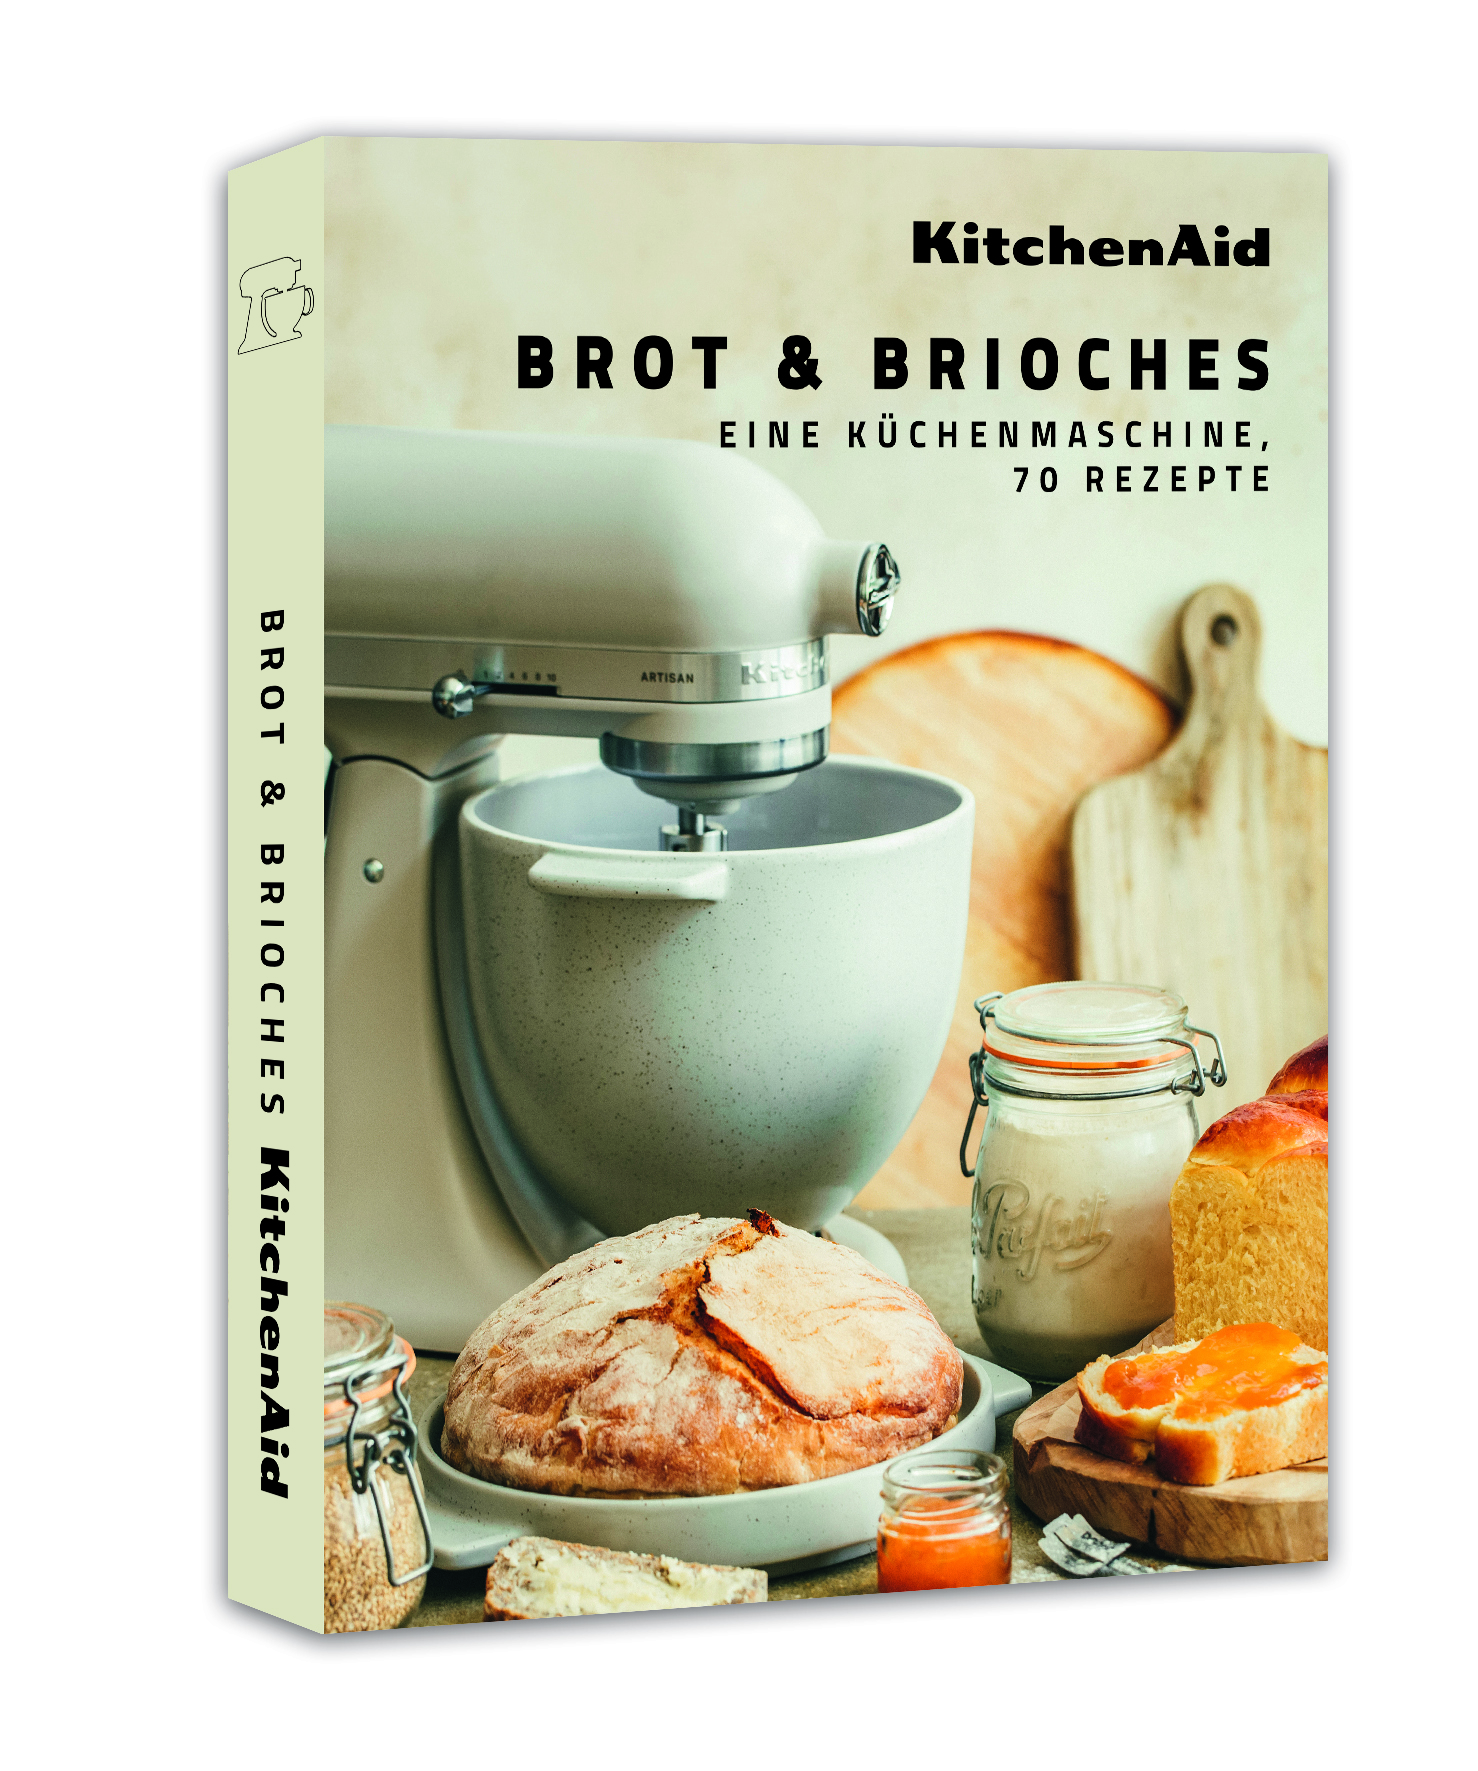 KitchenAid Kochbuch Brot & Brioche